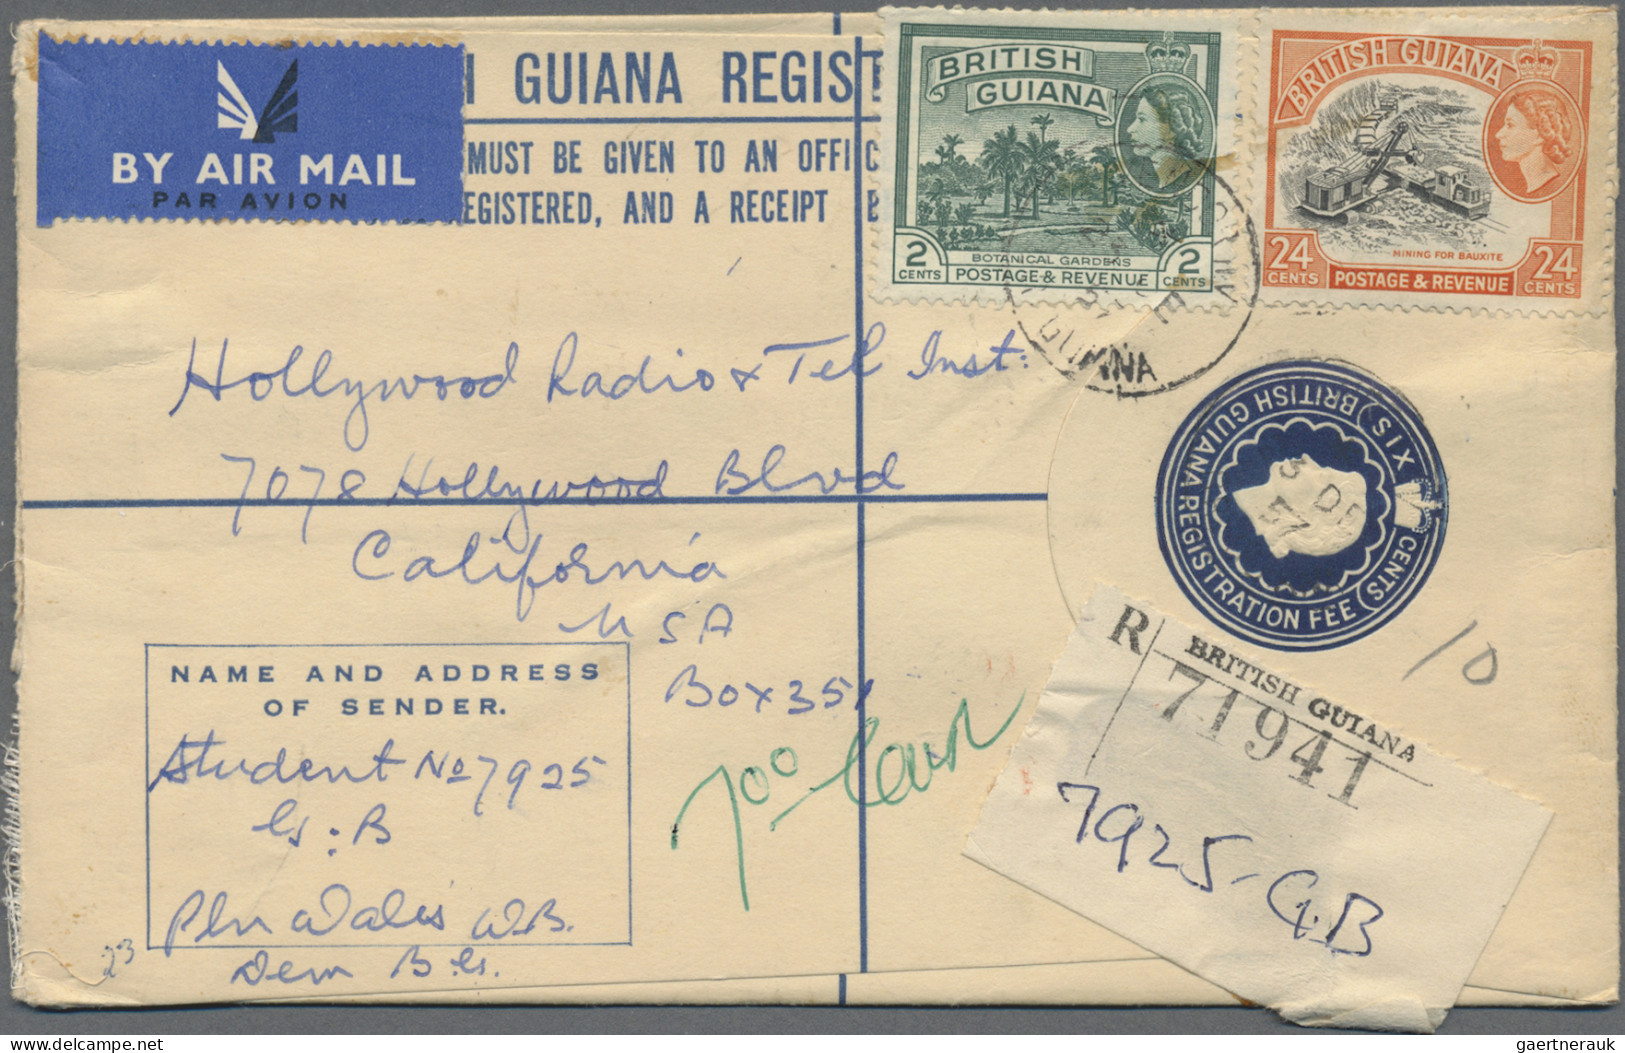 British Guiana - postal stationery: 1880/1960 (ca.), assortment of apprx. 45 use